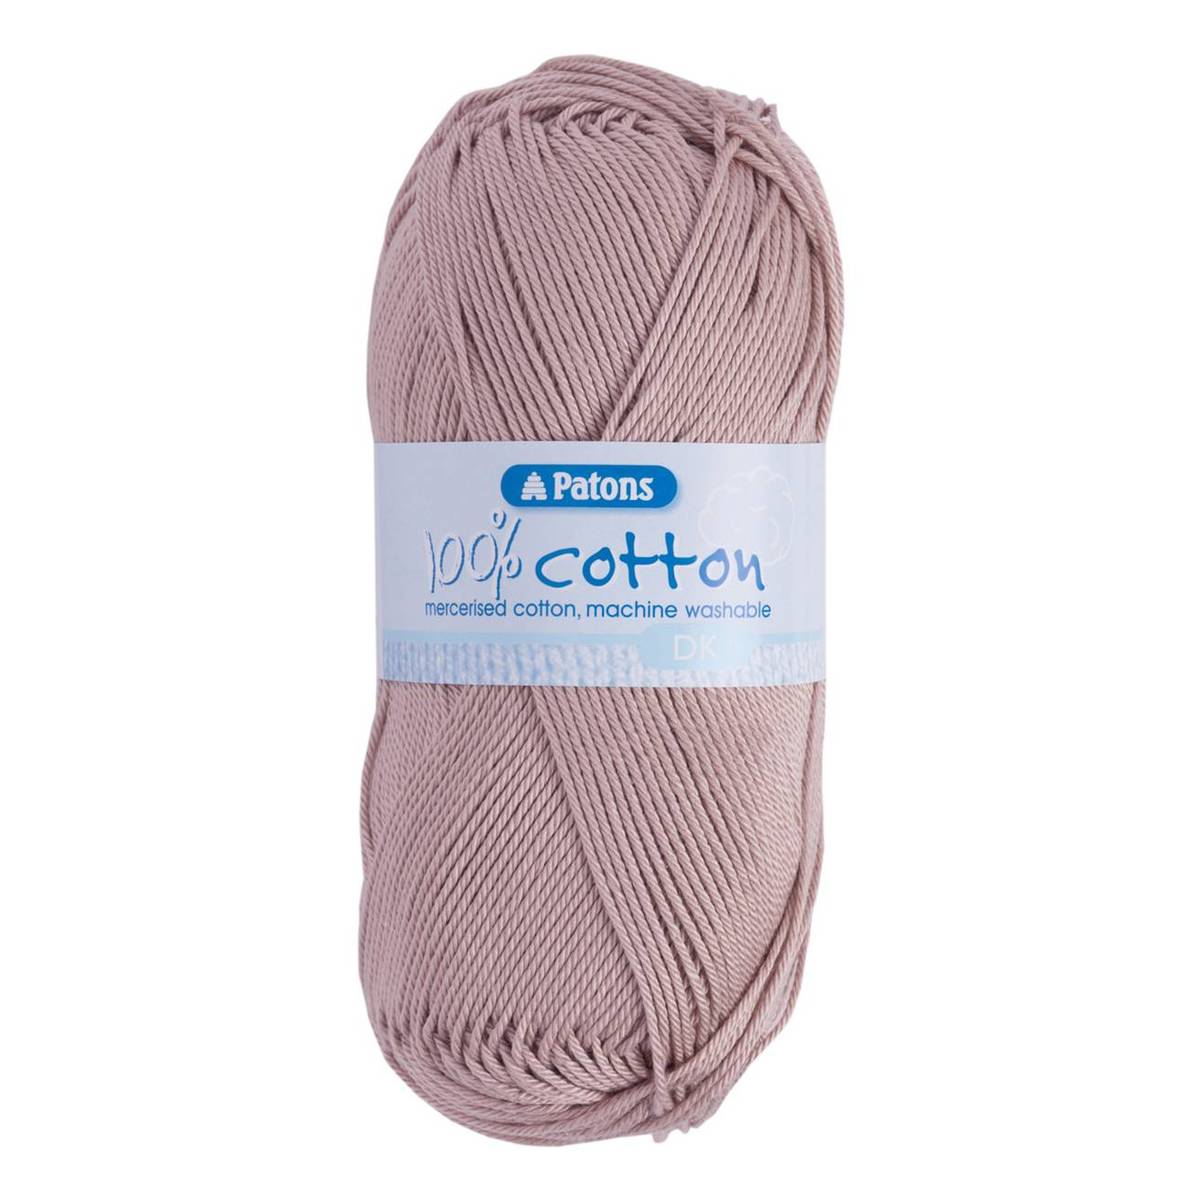  JubileeYarn Undyed Yarn - Craft Cotton Hank - 100% Cotton -  270g - 3 Pack